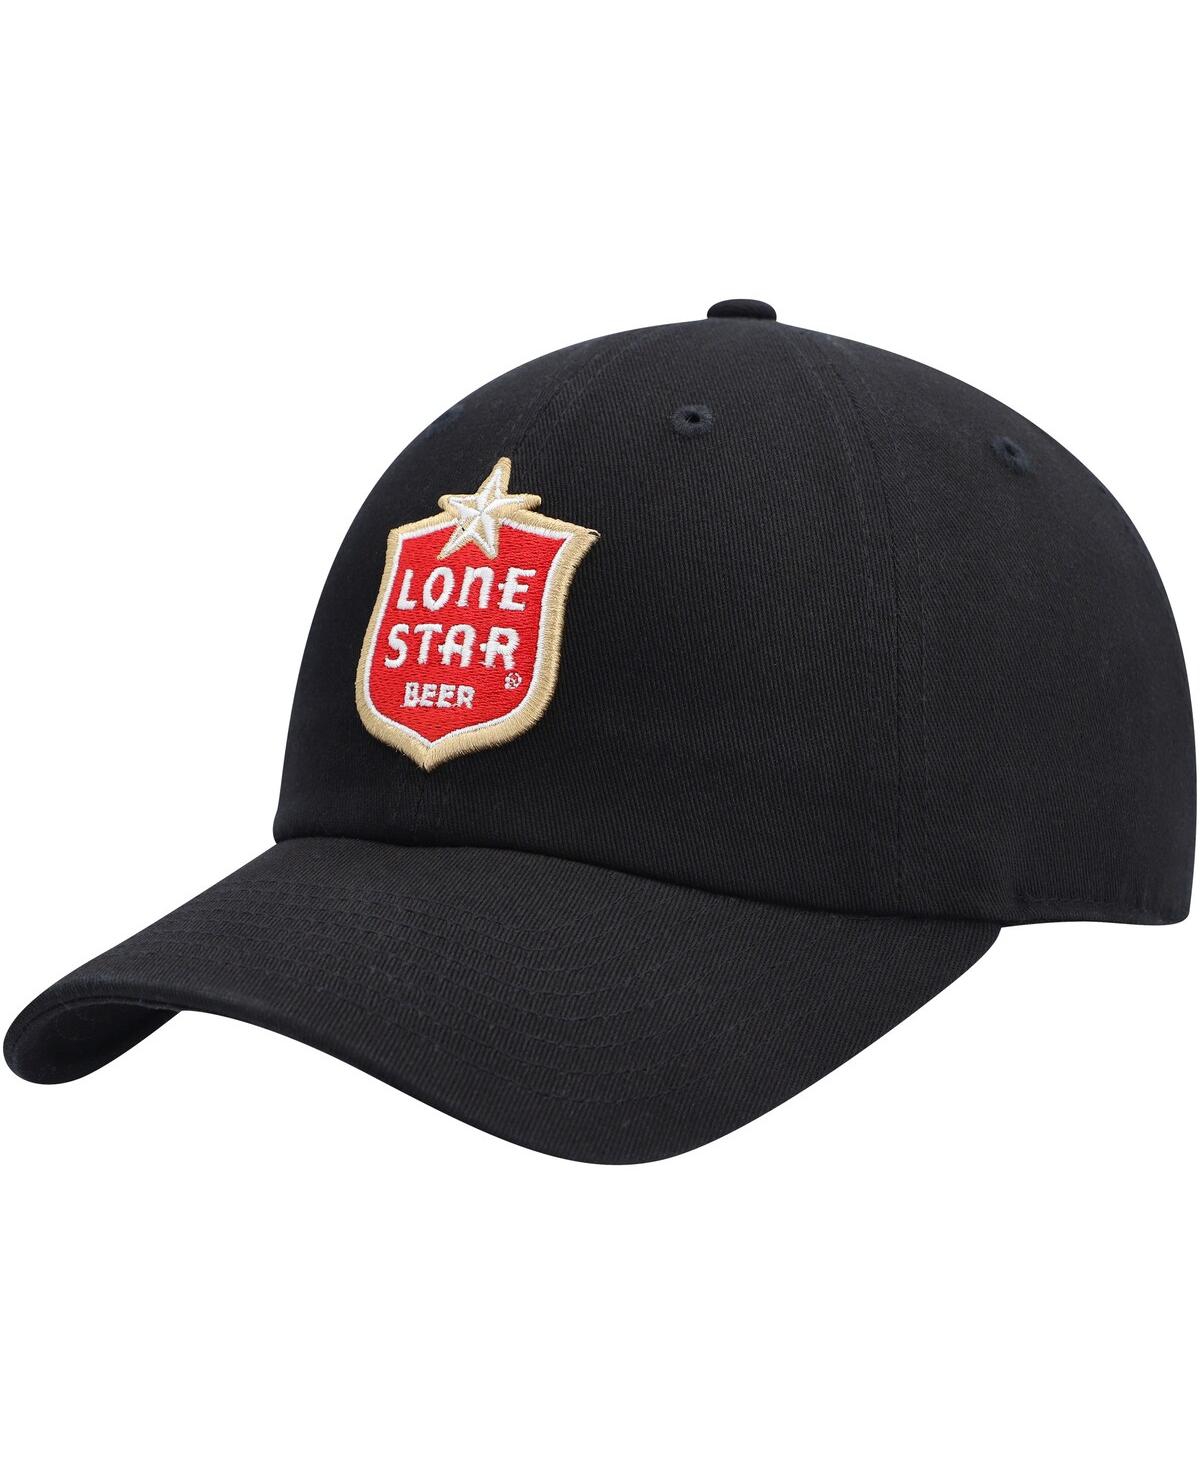 American Needle Men's  Black Lone Star Beer Ballpark Adjustable Hat